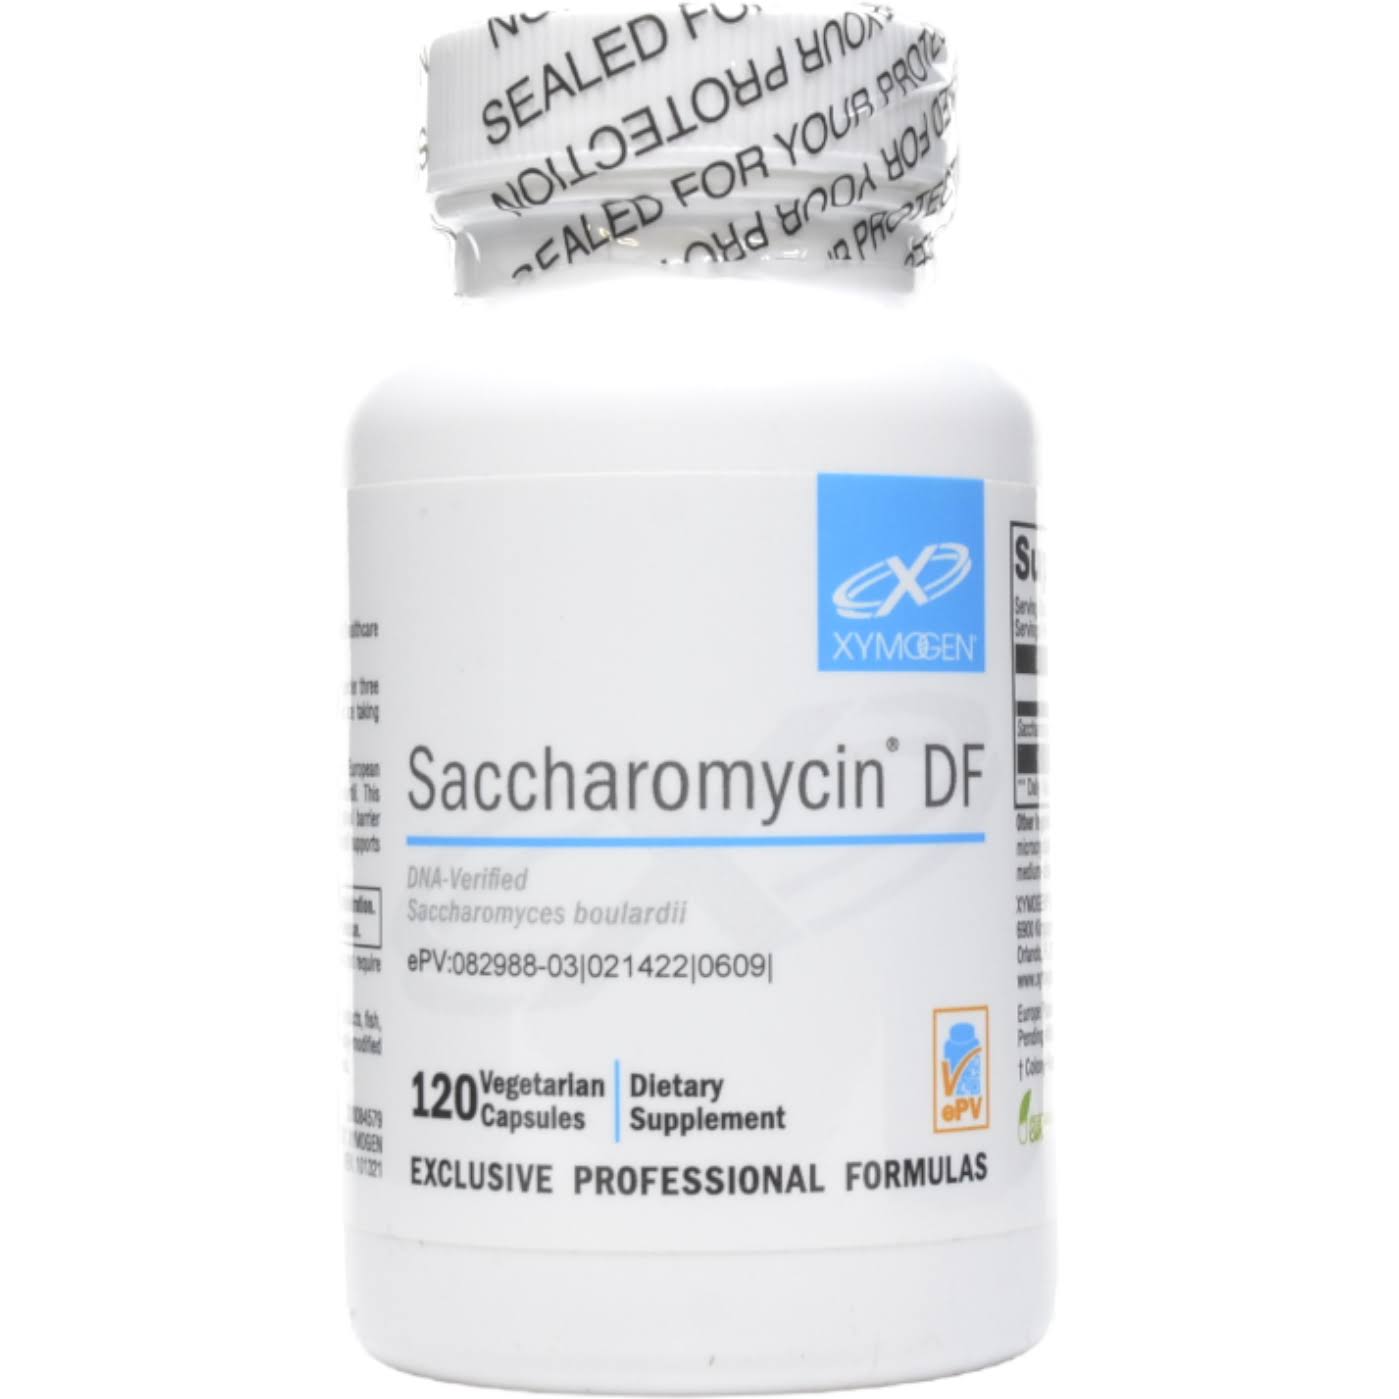 Xymogen Saccharomycin DF - 120 Capsules